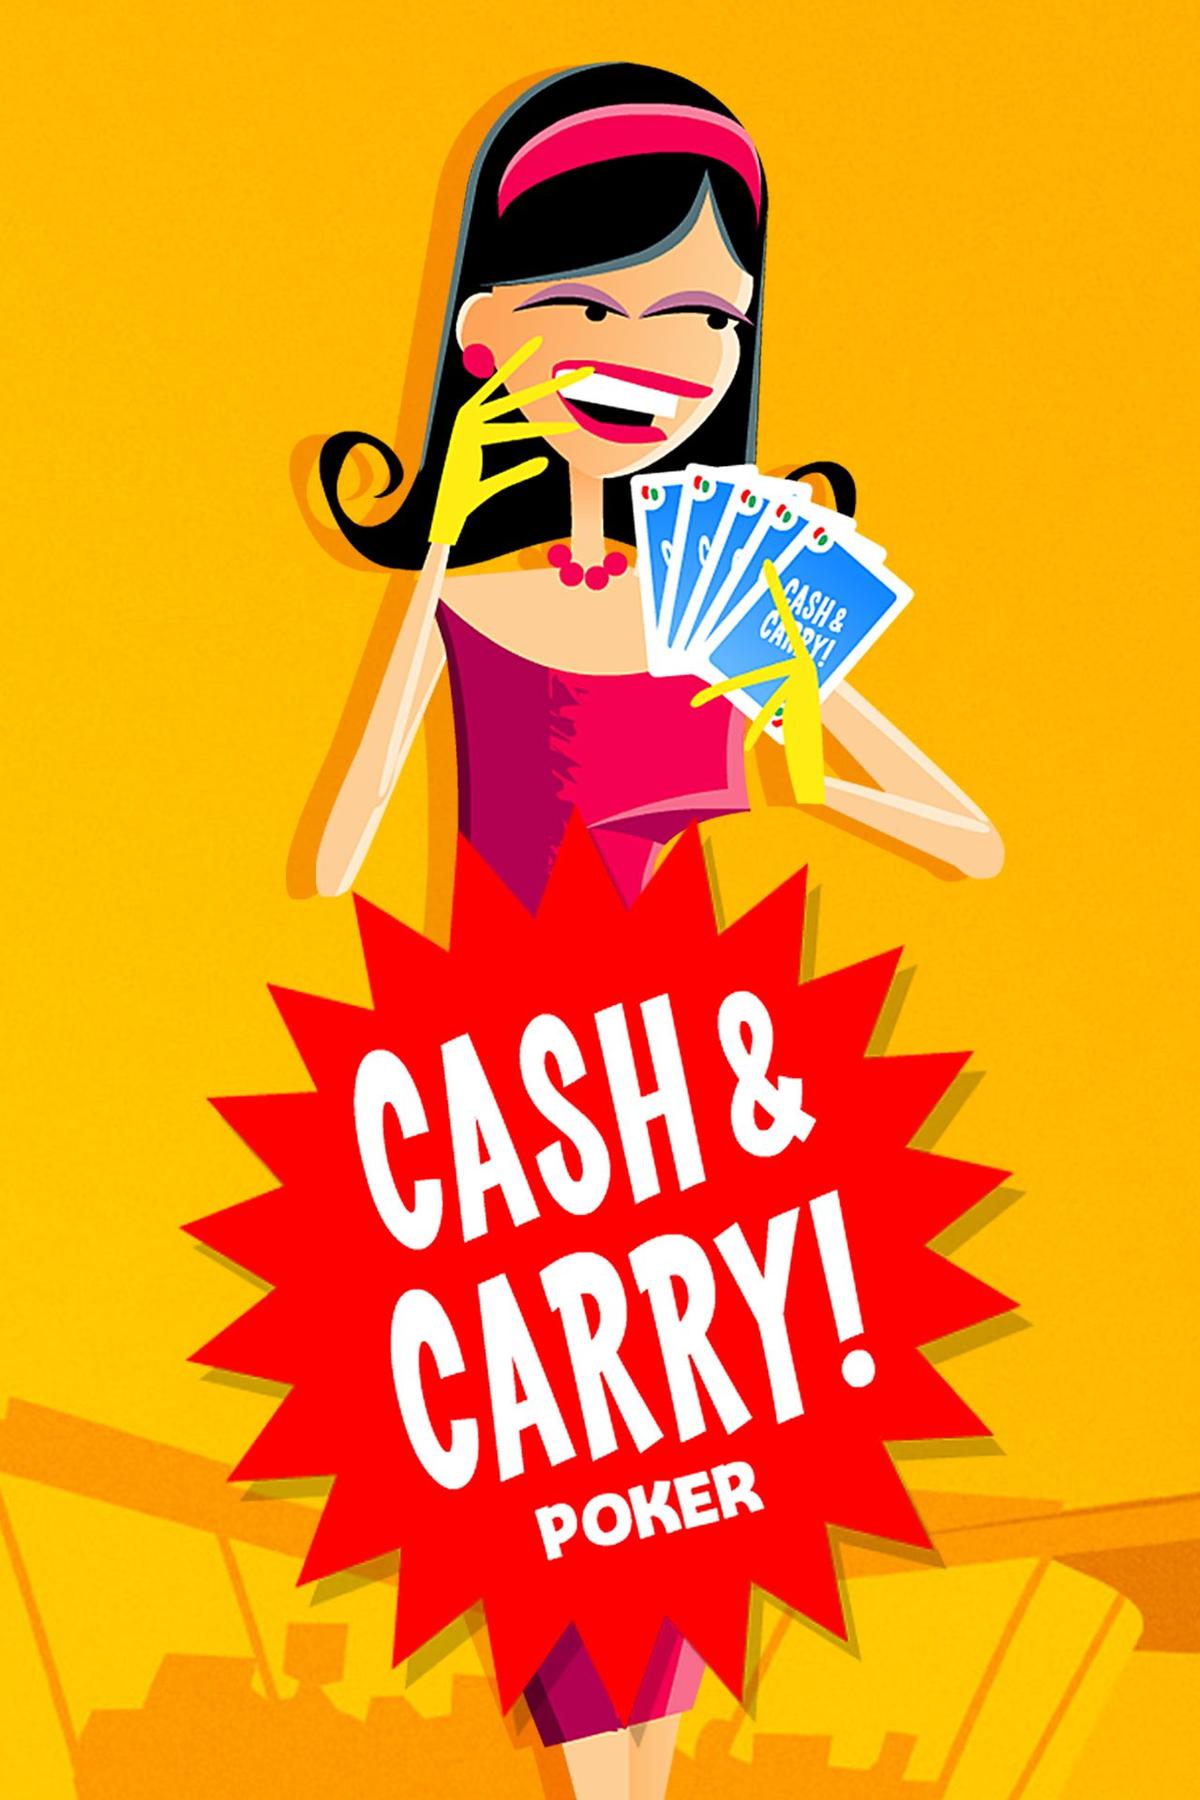 Cash & Carry Poker